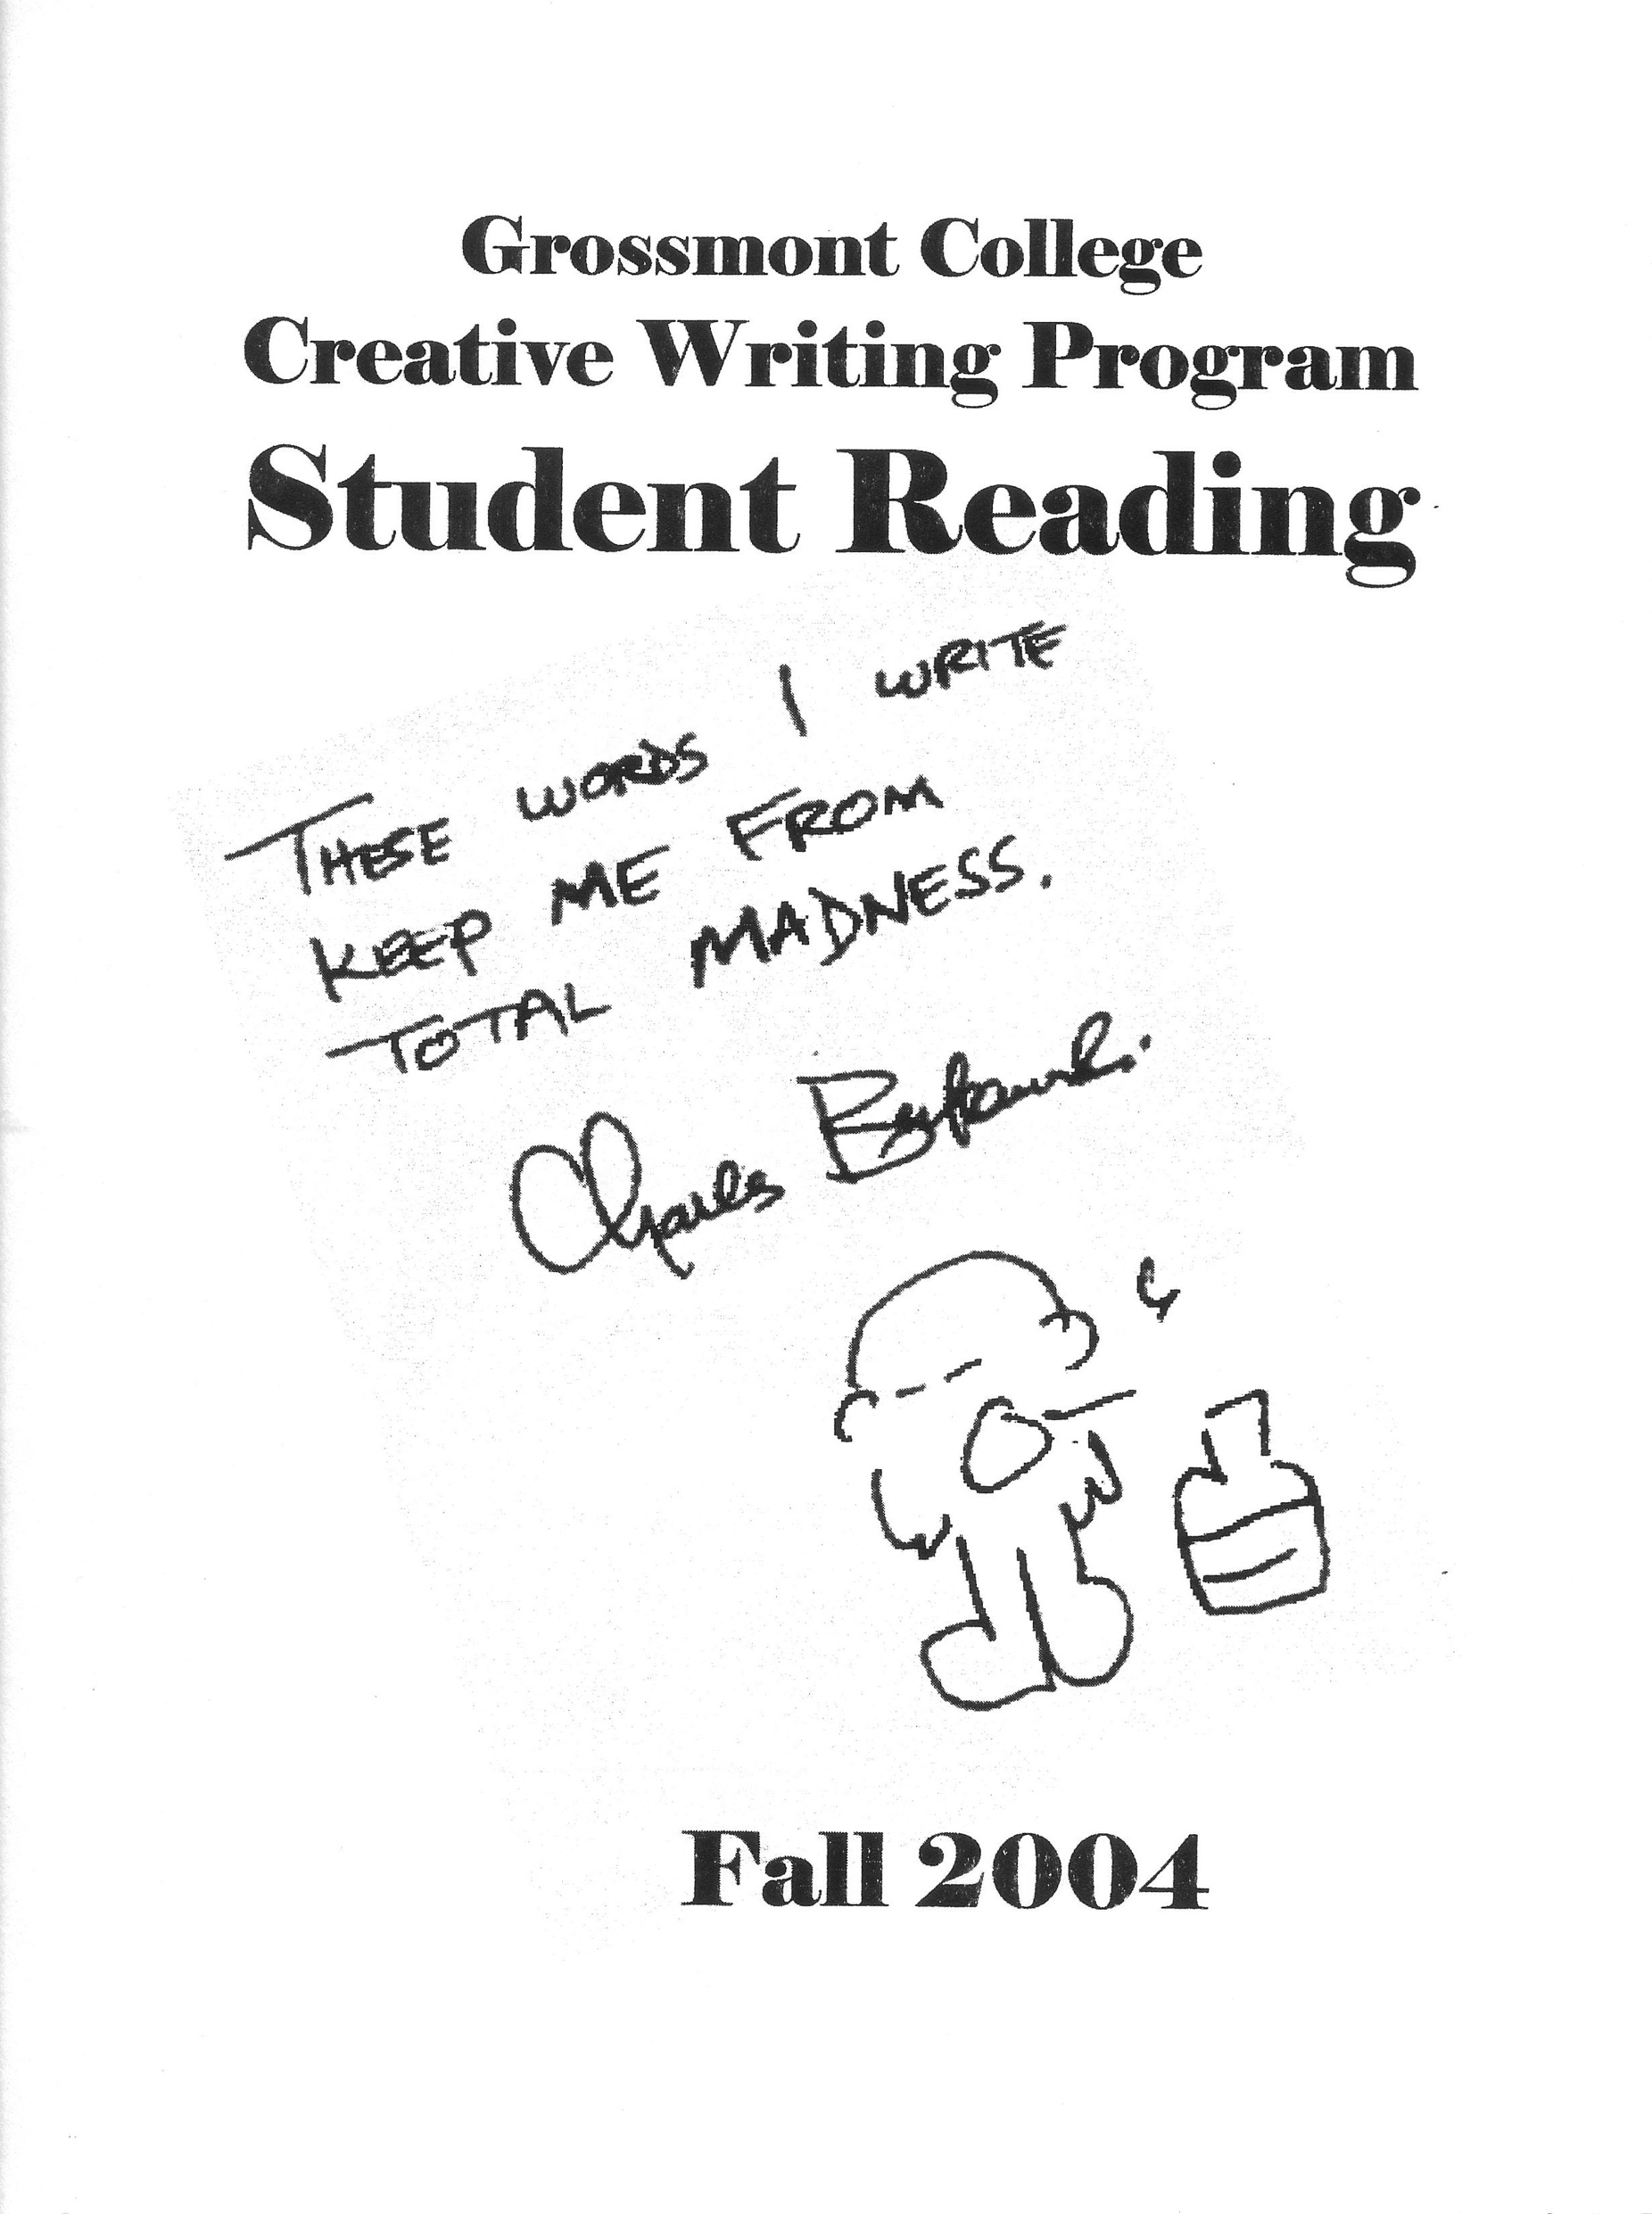 2004 Fall Student Reading program cover